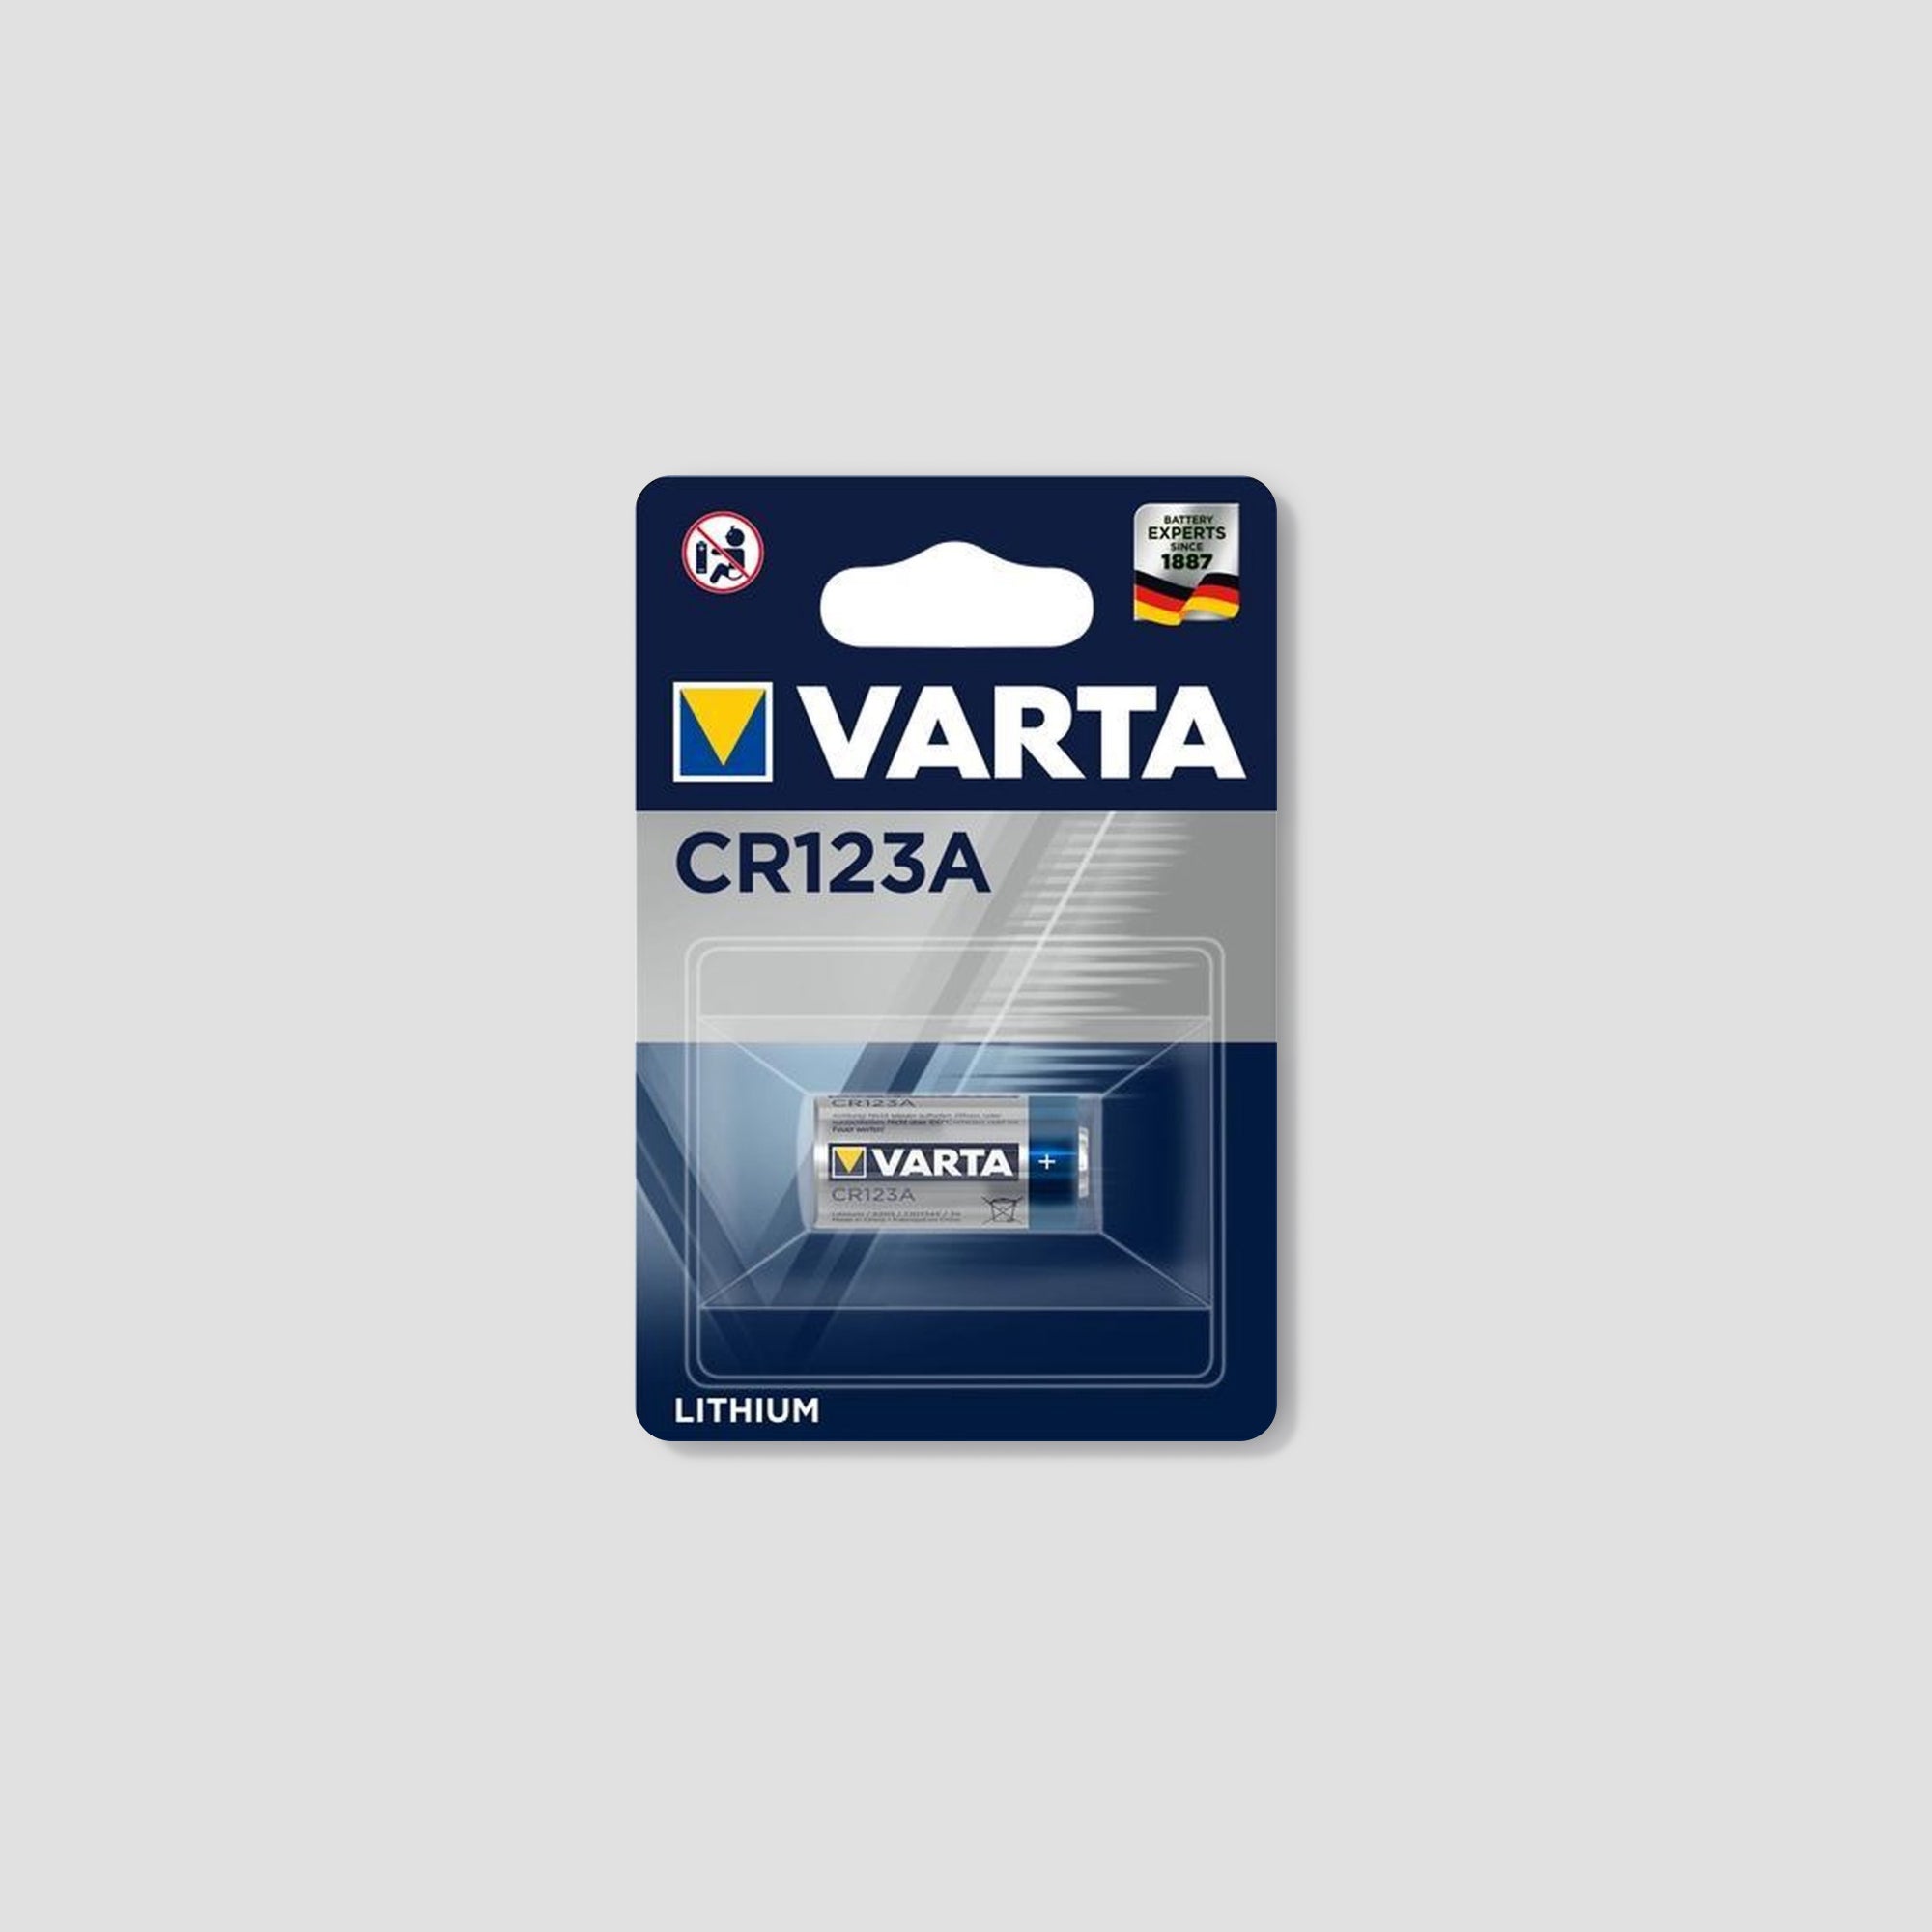 Buy Varta CR123A Battery now at Analogue Amsterdam